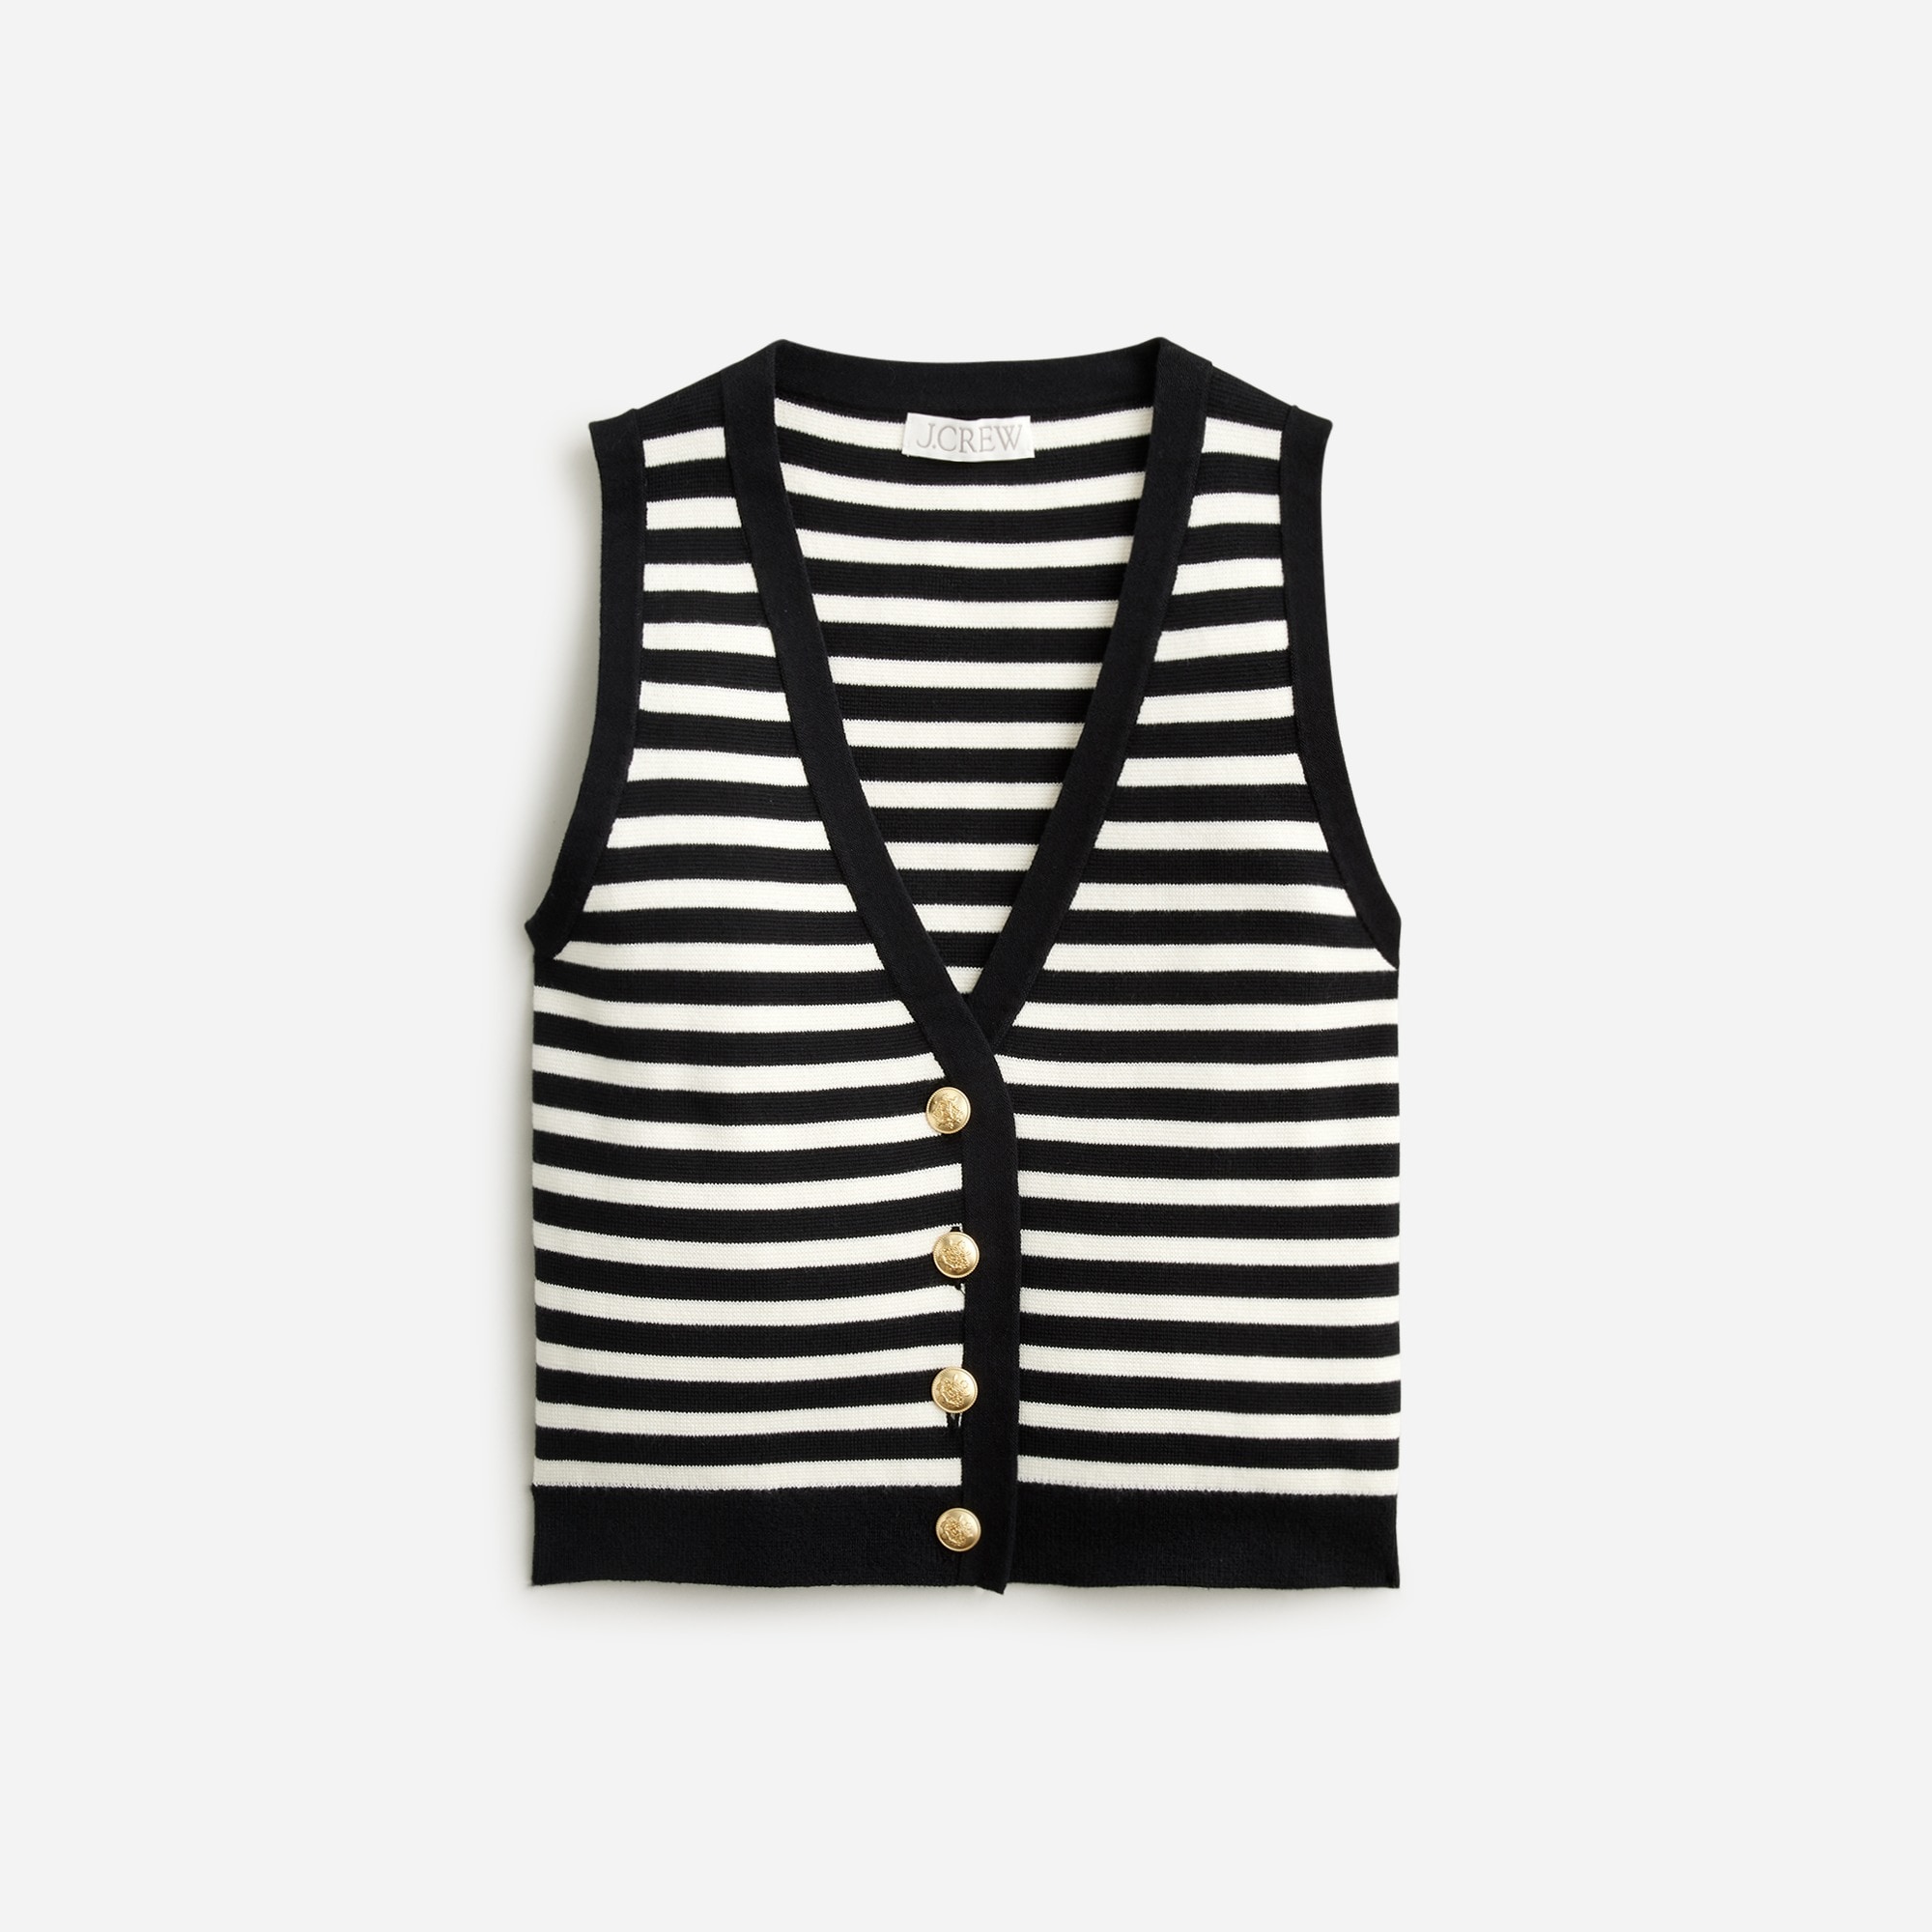  Emilie sweater-vest in stripe